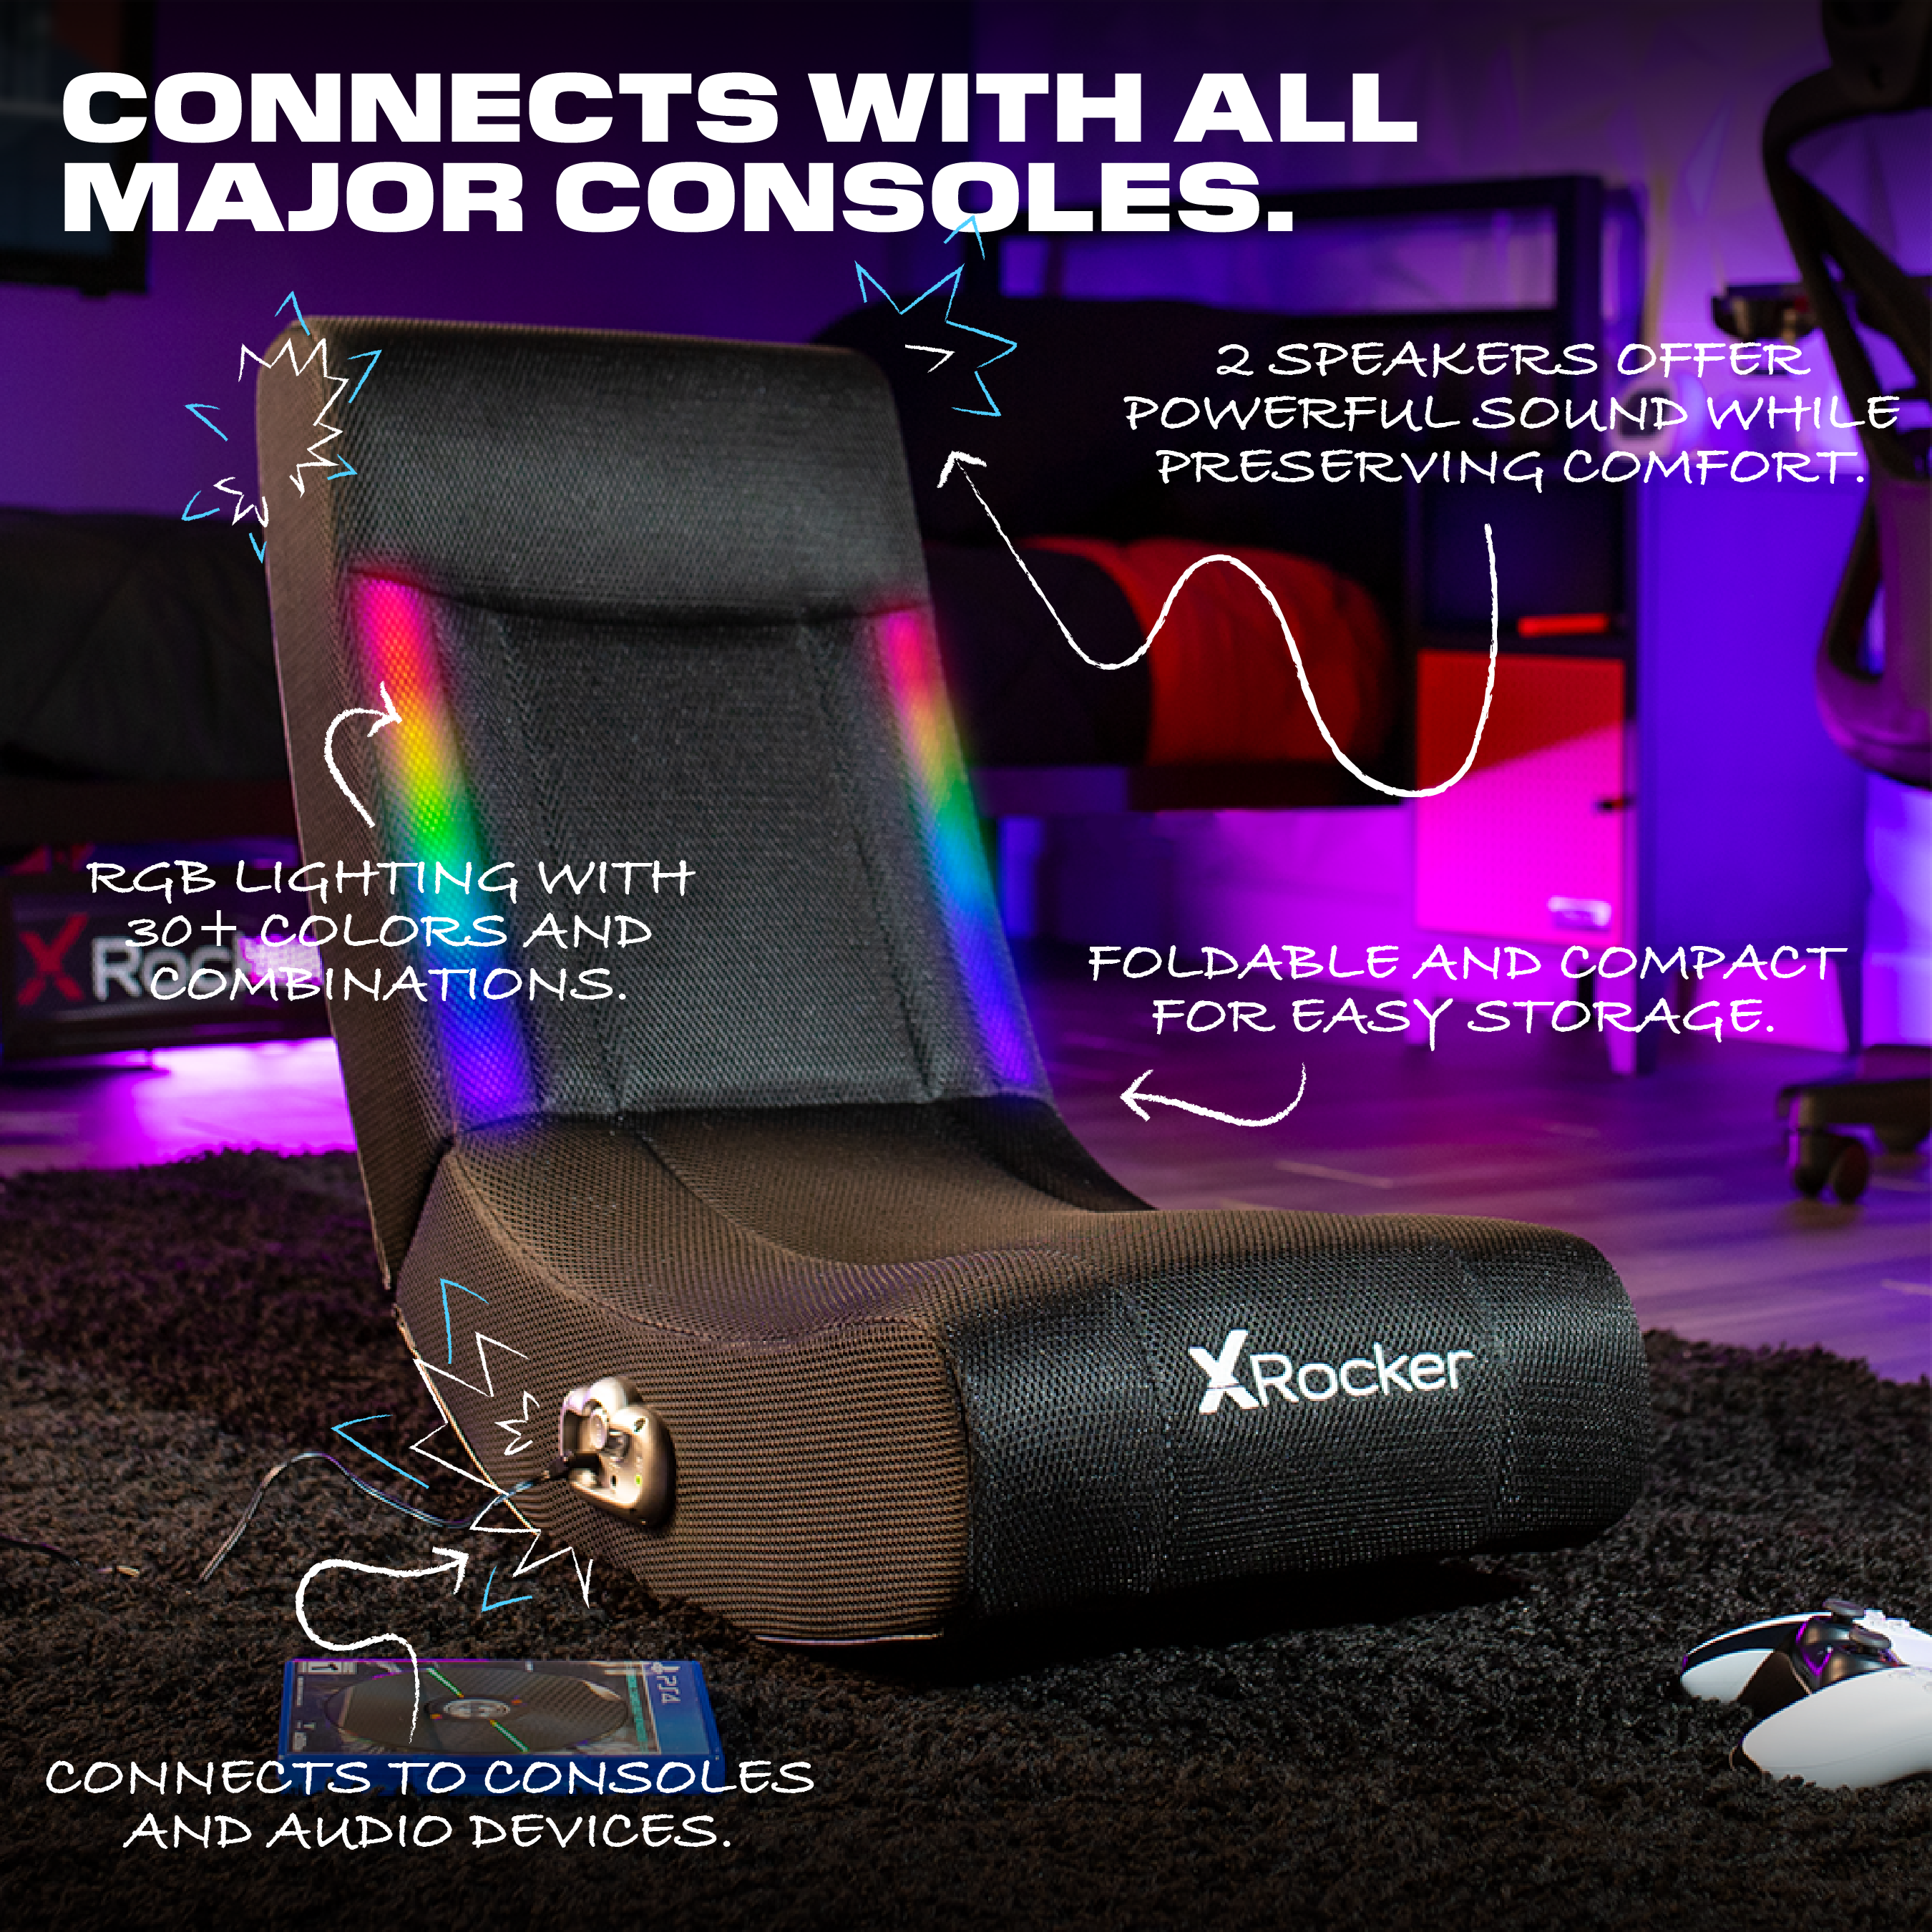 X Rocker Solo RGB Audio Floor Rocker Gaming Chair, Black Mesh 29.33 in x 14.96 in x 24.21 in - image 3 of 6